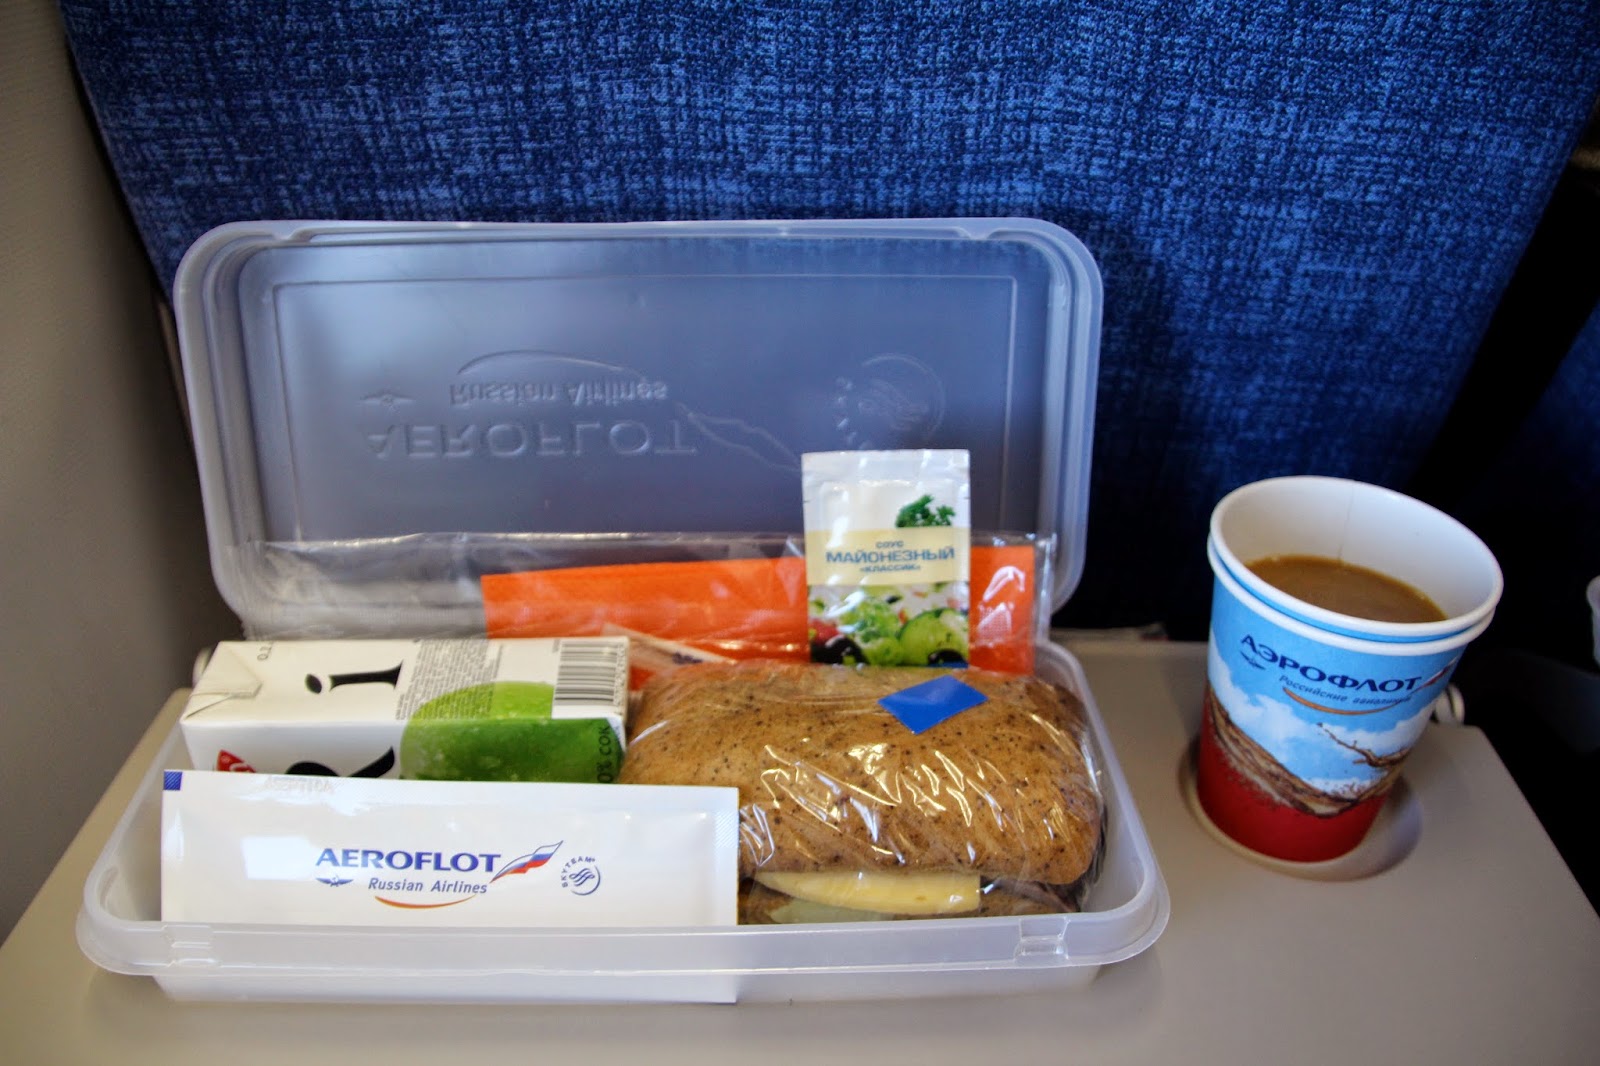 Su aeroflot. Сэндвич Аэрофлот. Питание на рейсе Аэрофлота. Питание в самолете Аэрофлот. Аэрофлот питание сэндвичи.